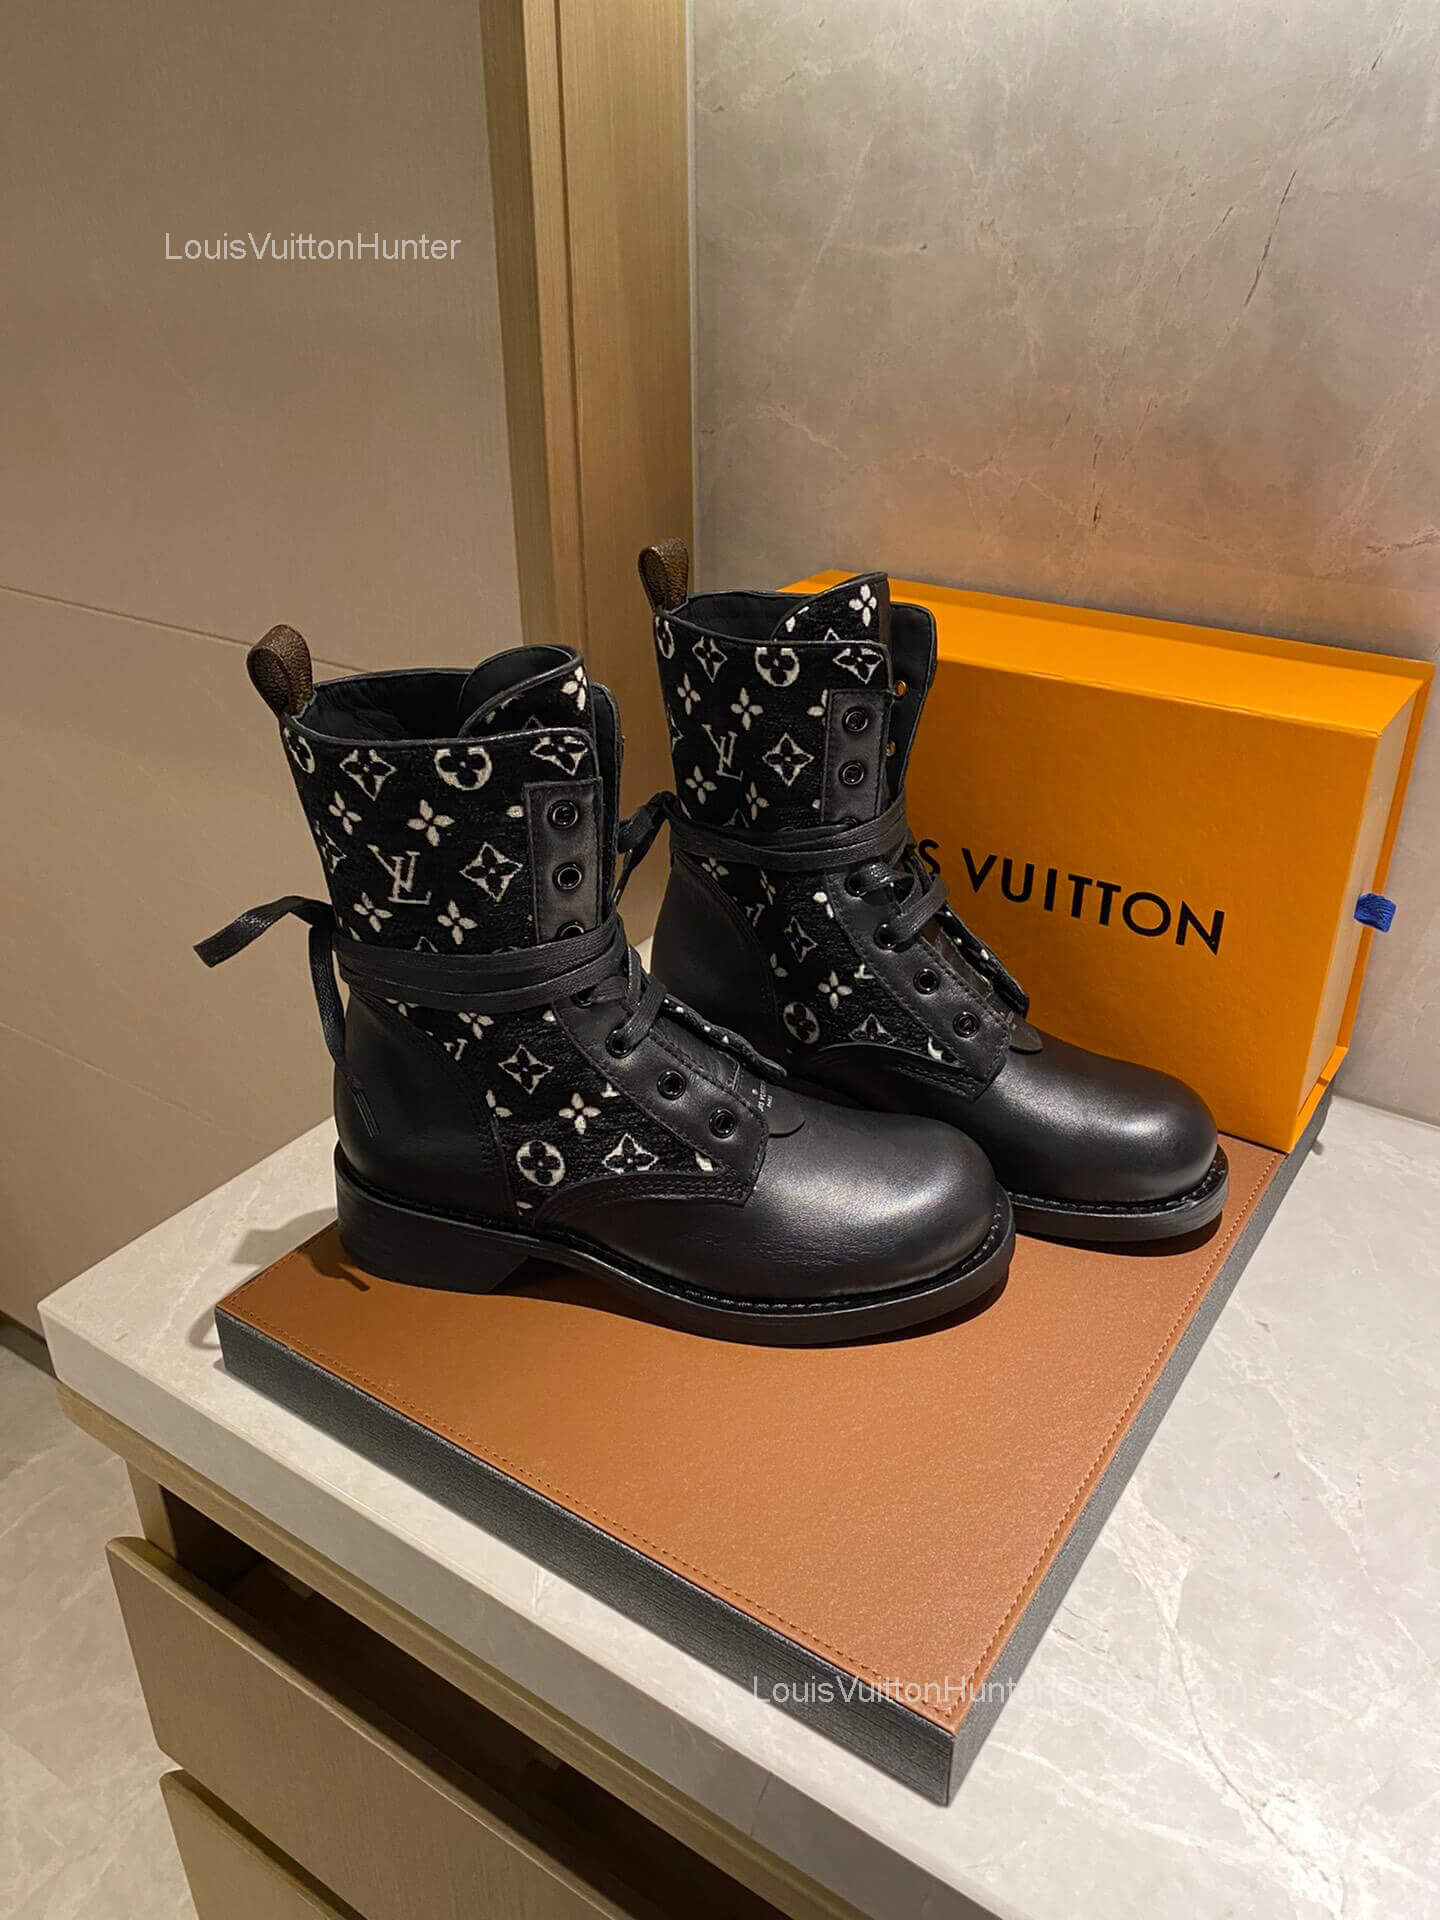 Louis Vuitton Metropolis Flat Ranger Ankle Boot in Black White Jacquard Textile and Black Calf Leather 2281701